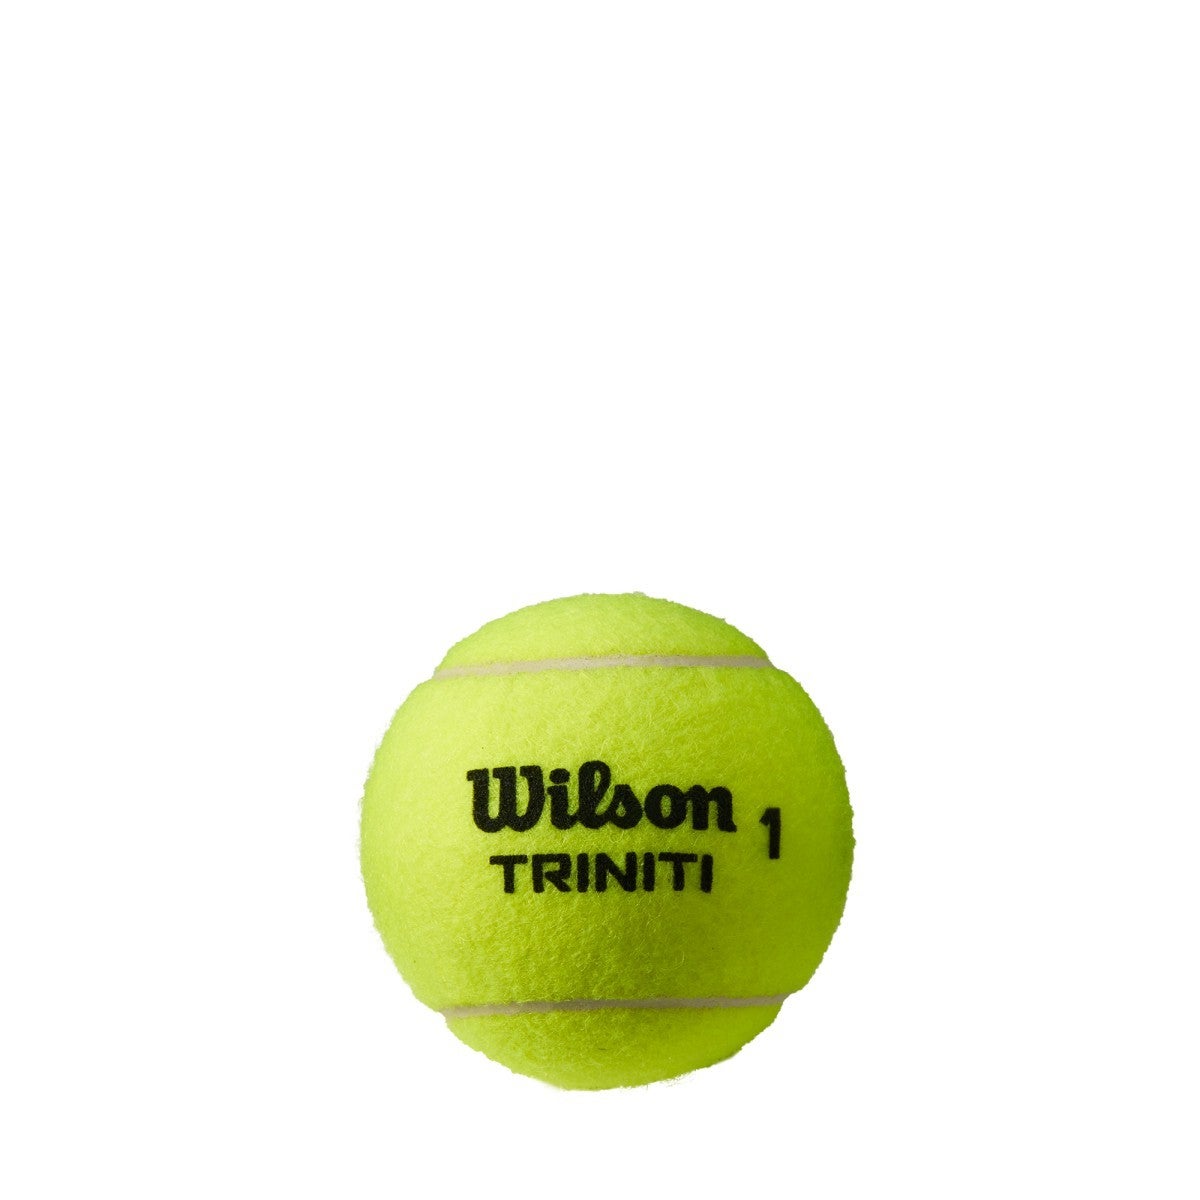 Wilson Triniti Tennis Ball - 3 Ball Sleeve - Case